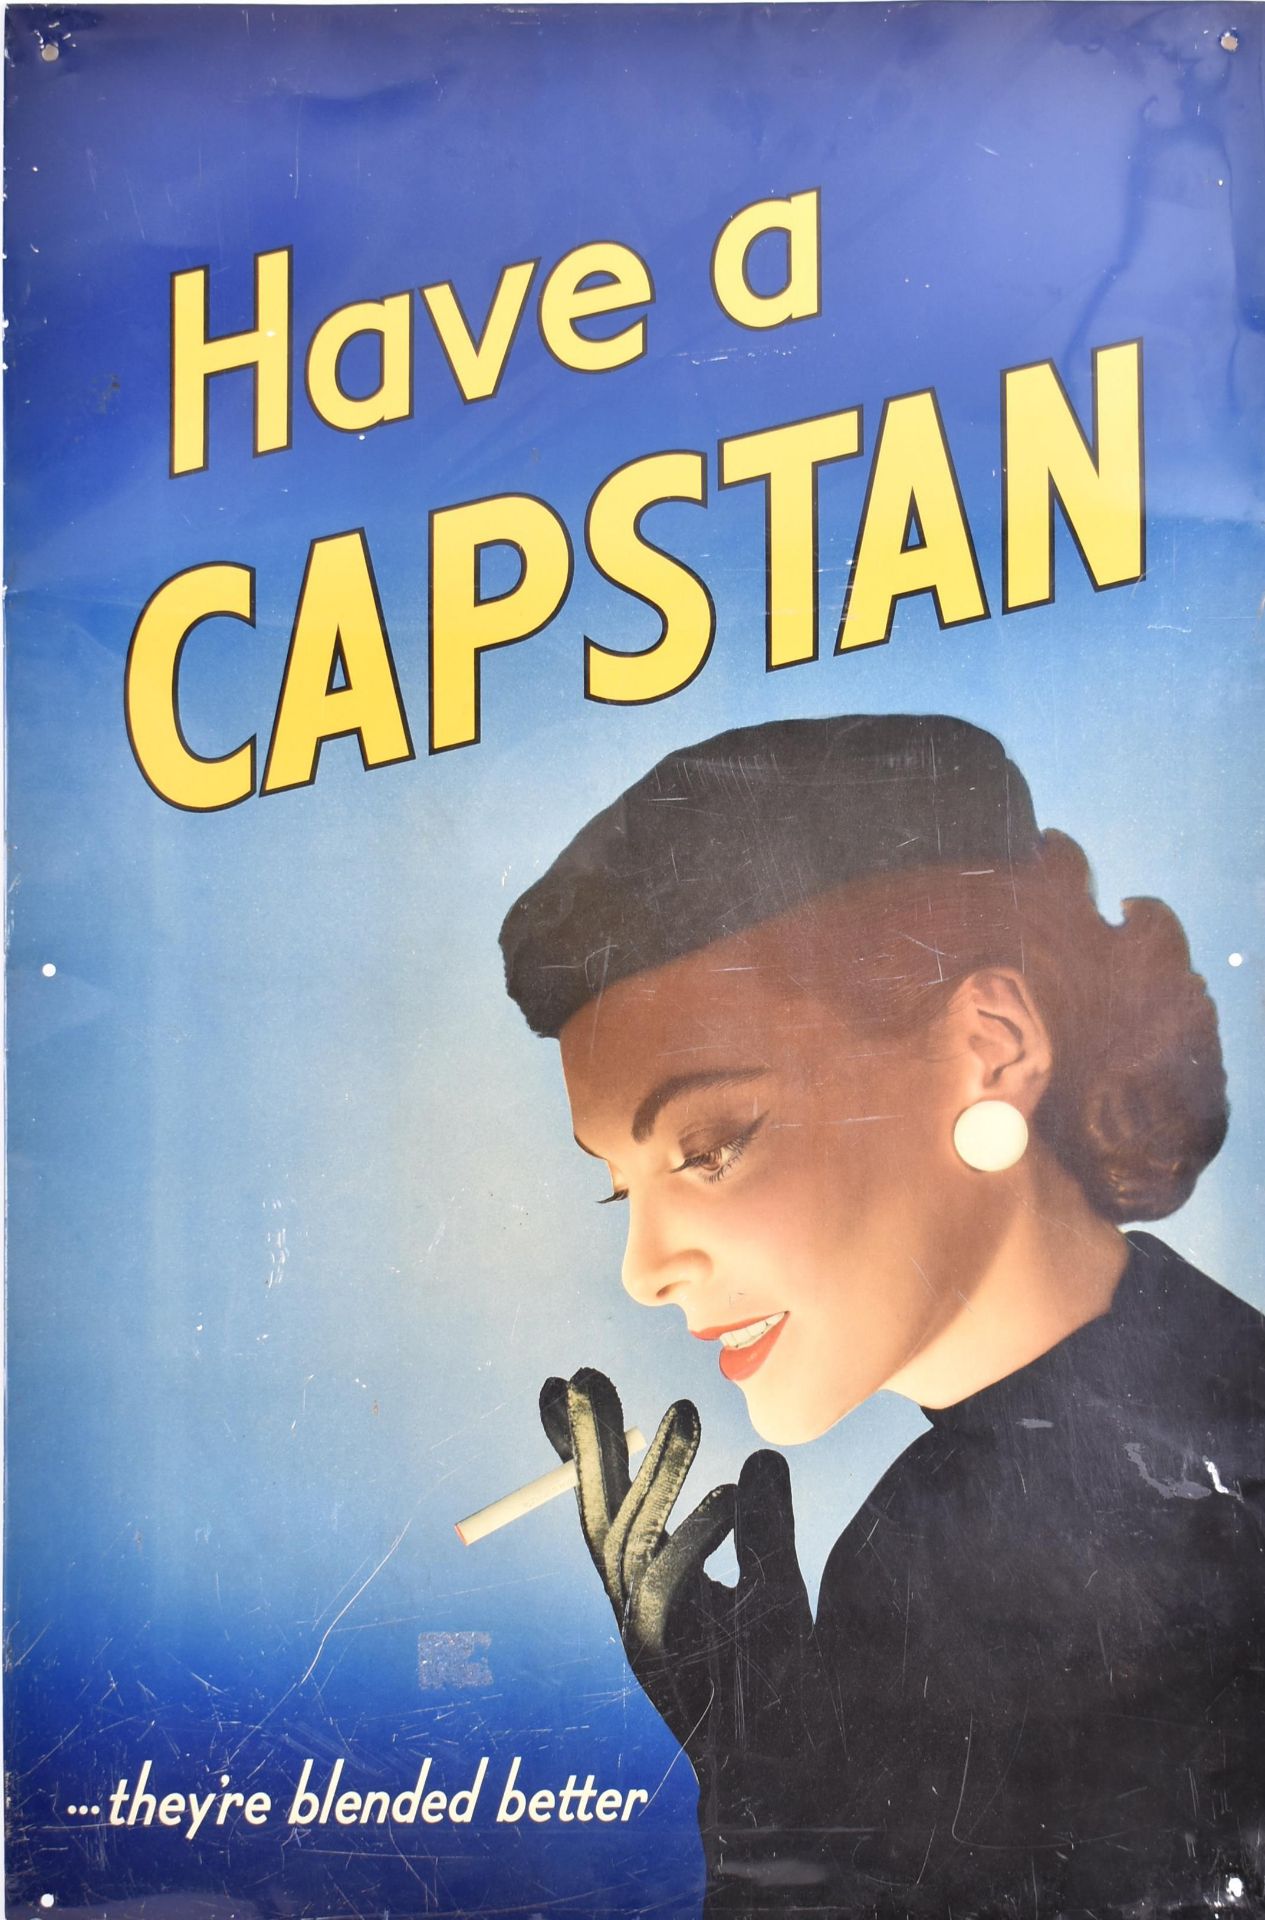 VINTAGE ADVERTISING - CAPSTAN - 1950S TIN ADVERTISEMENT SIGN